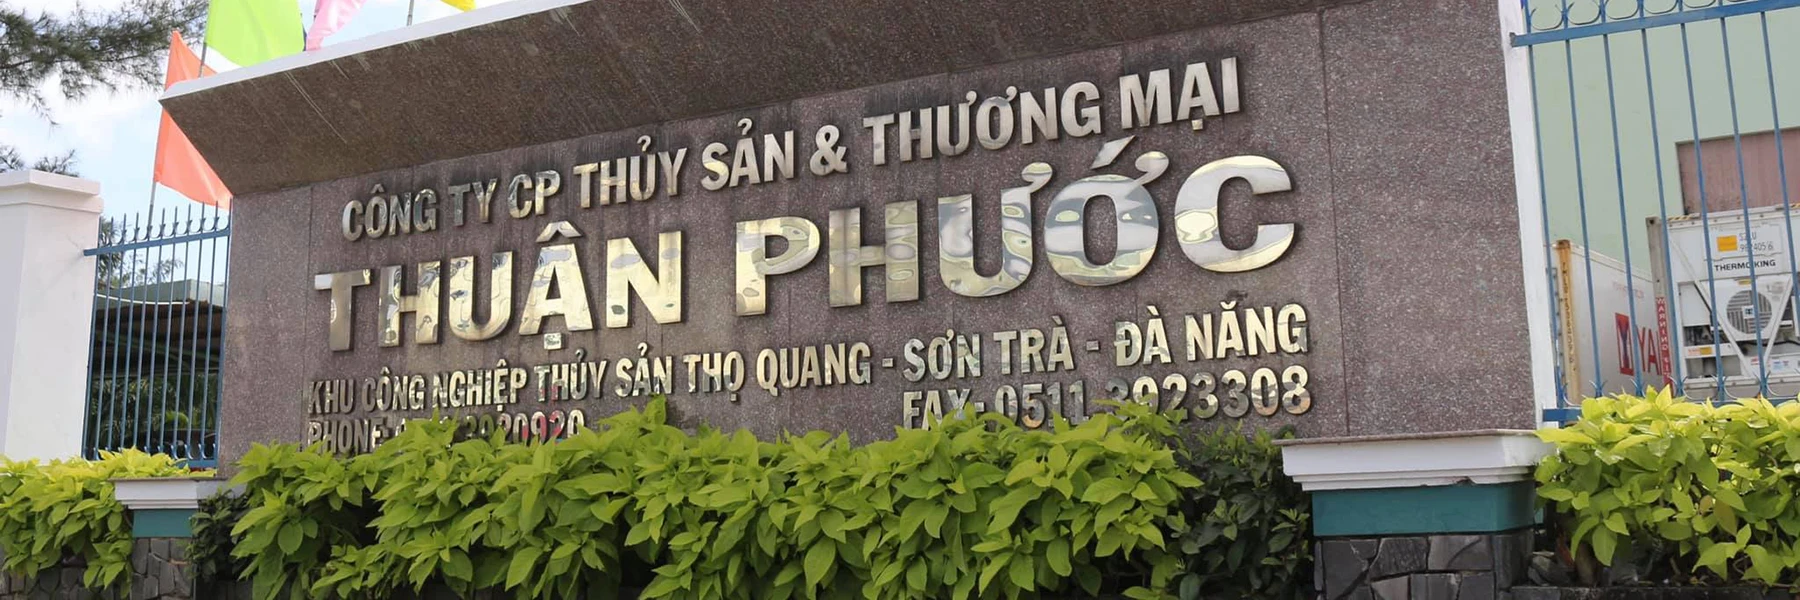 Thuan Phuoc Seafoods